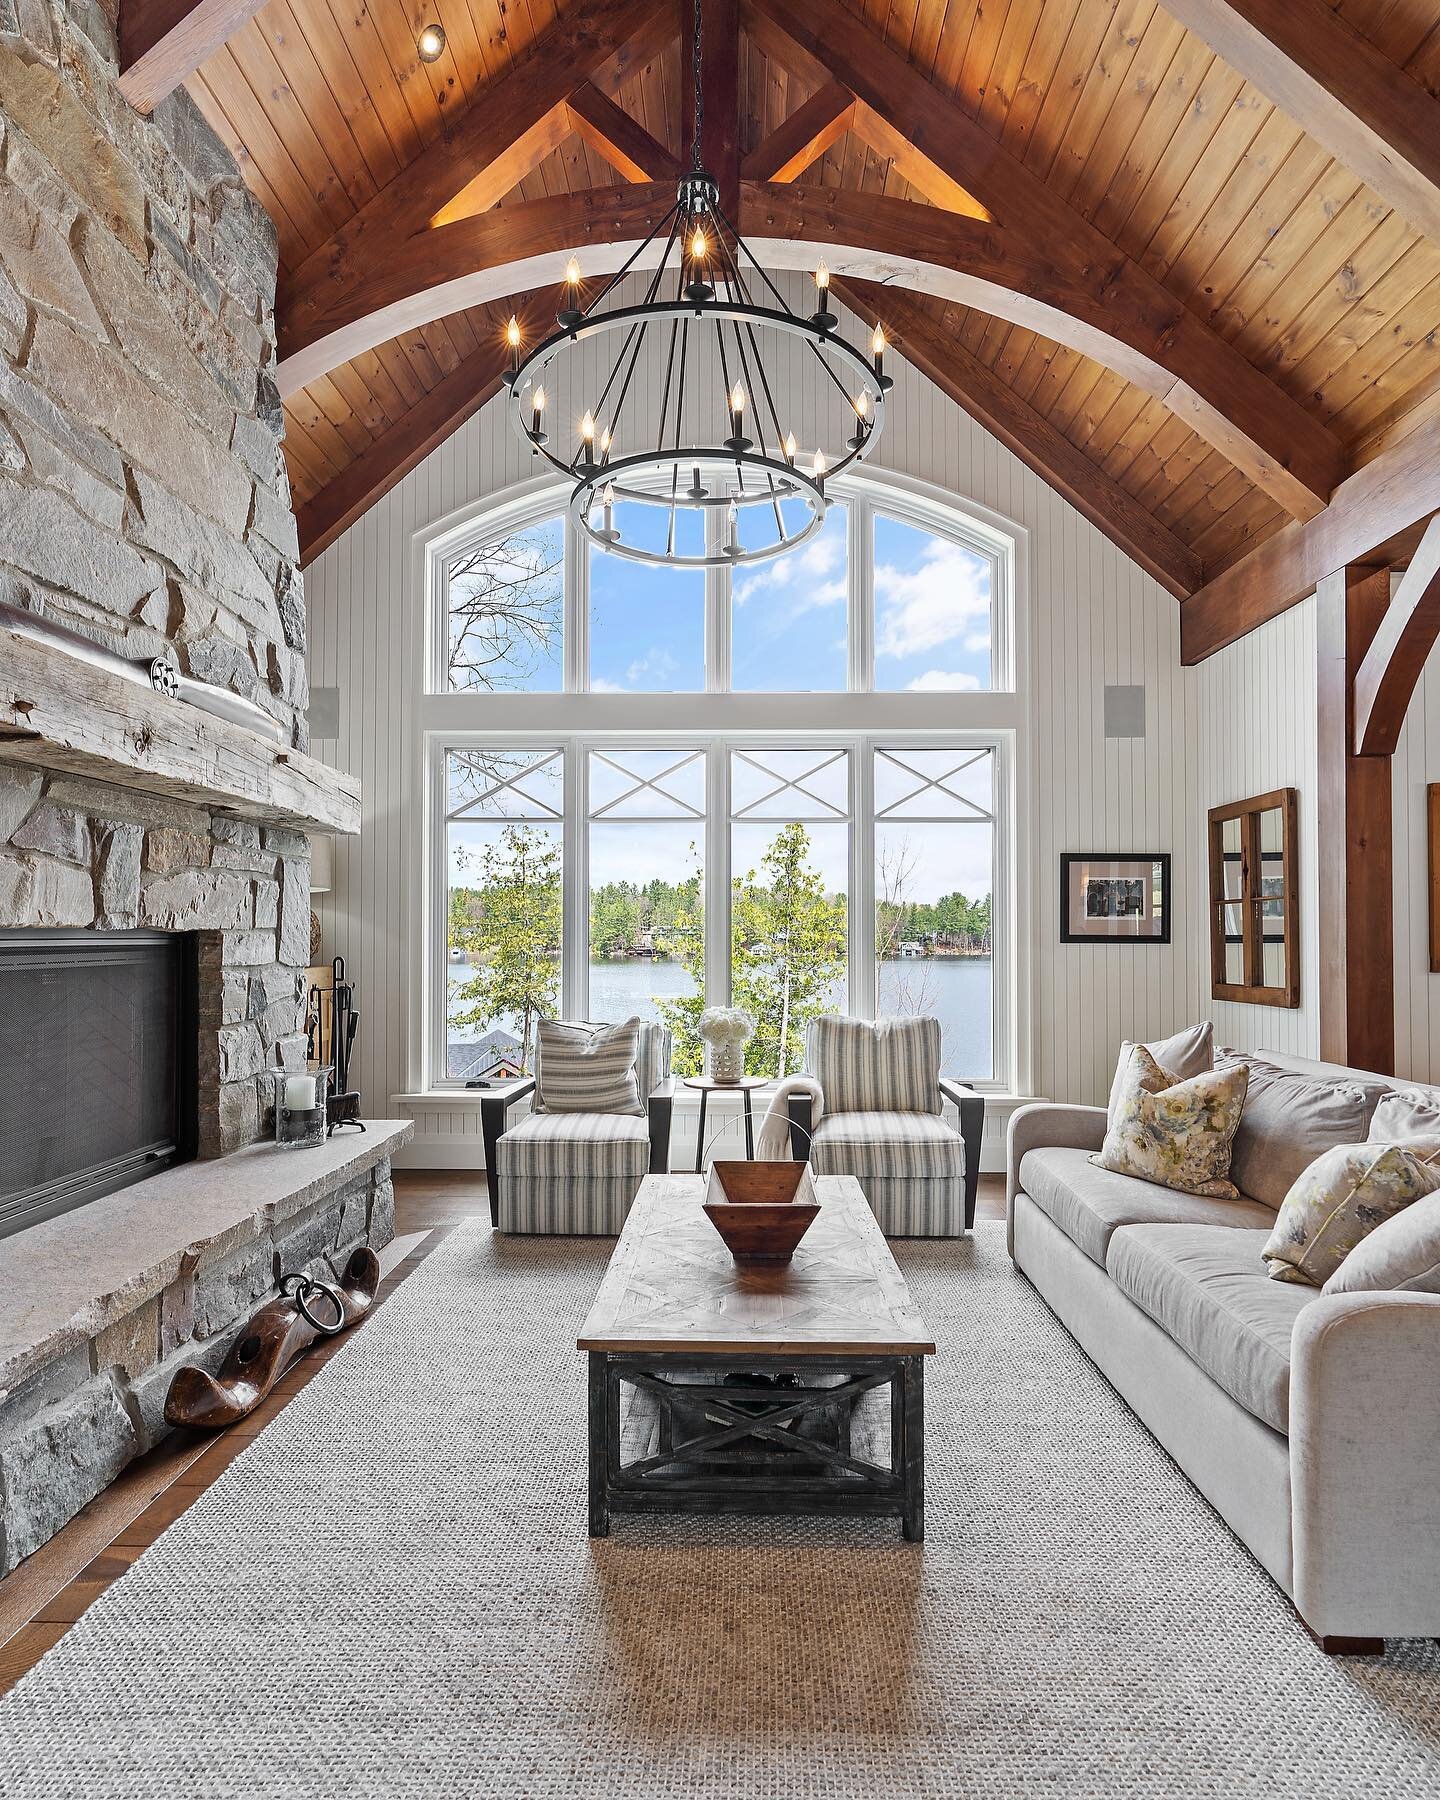 Living room views on Lake Muskoka ☀️

$6.495M home brought to market by @muskokacottagesforsale @dustin.cleveland 

#muskokarealestate #muskoka #muskokalakes #muskokalife #interiorphotography #lakelife